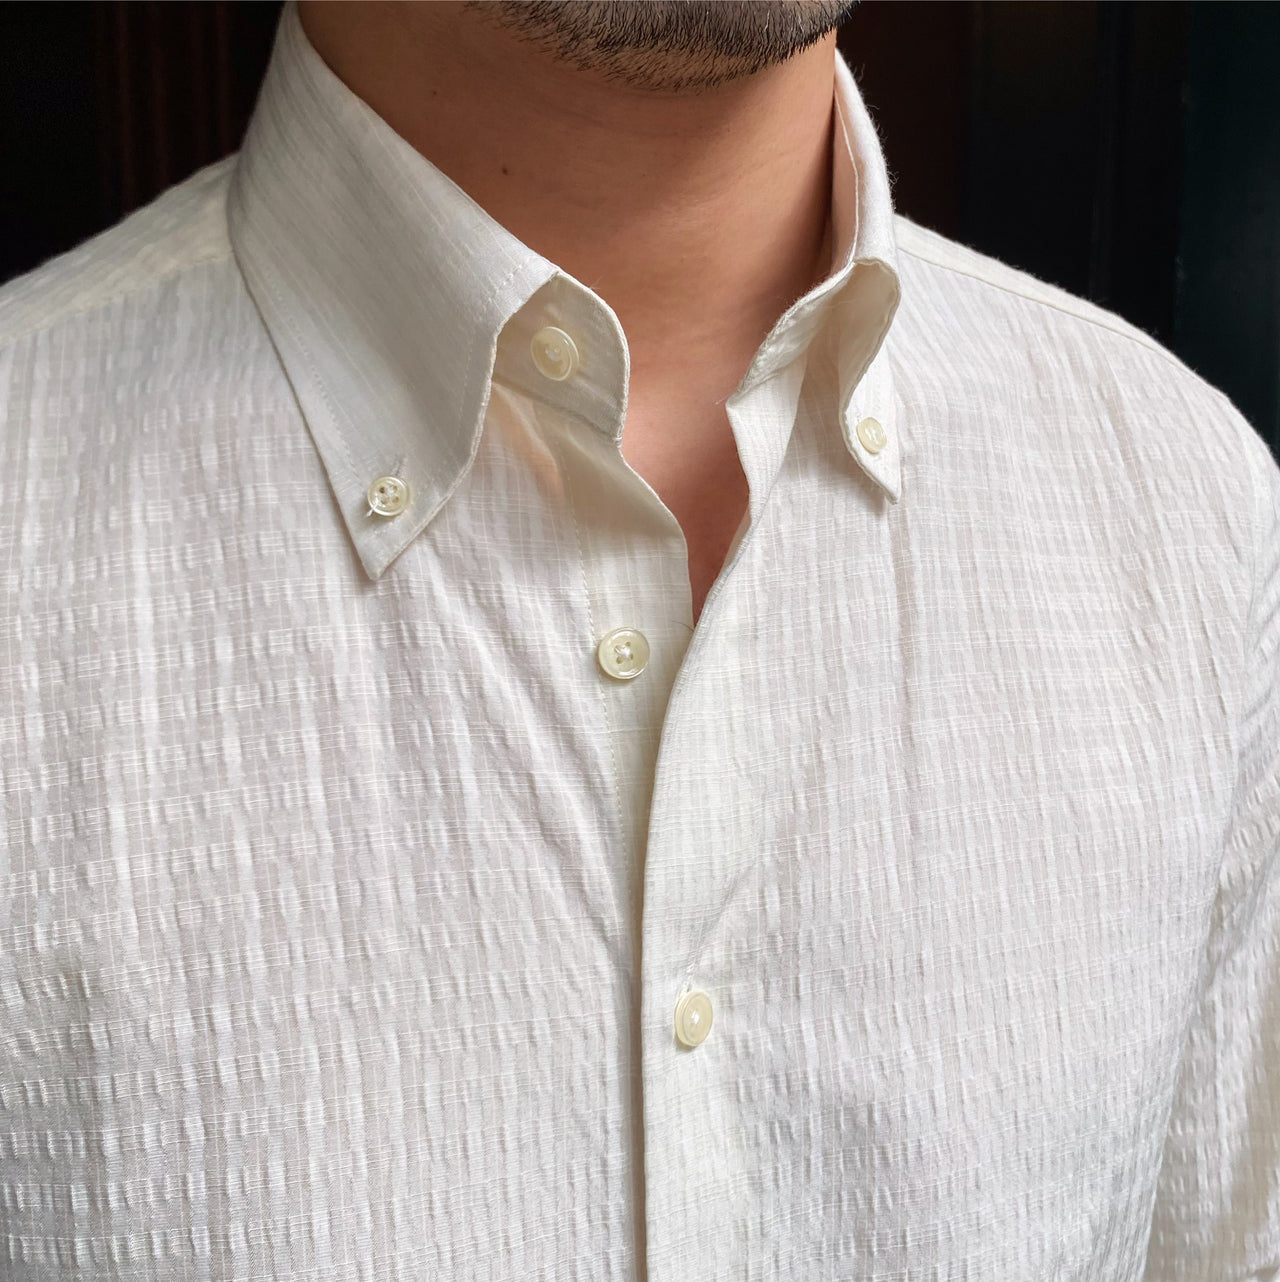 Retro Breathable Wrinkle Resistant Shirt Italian